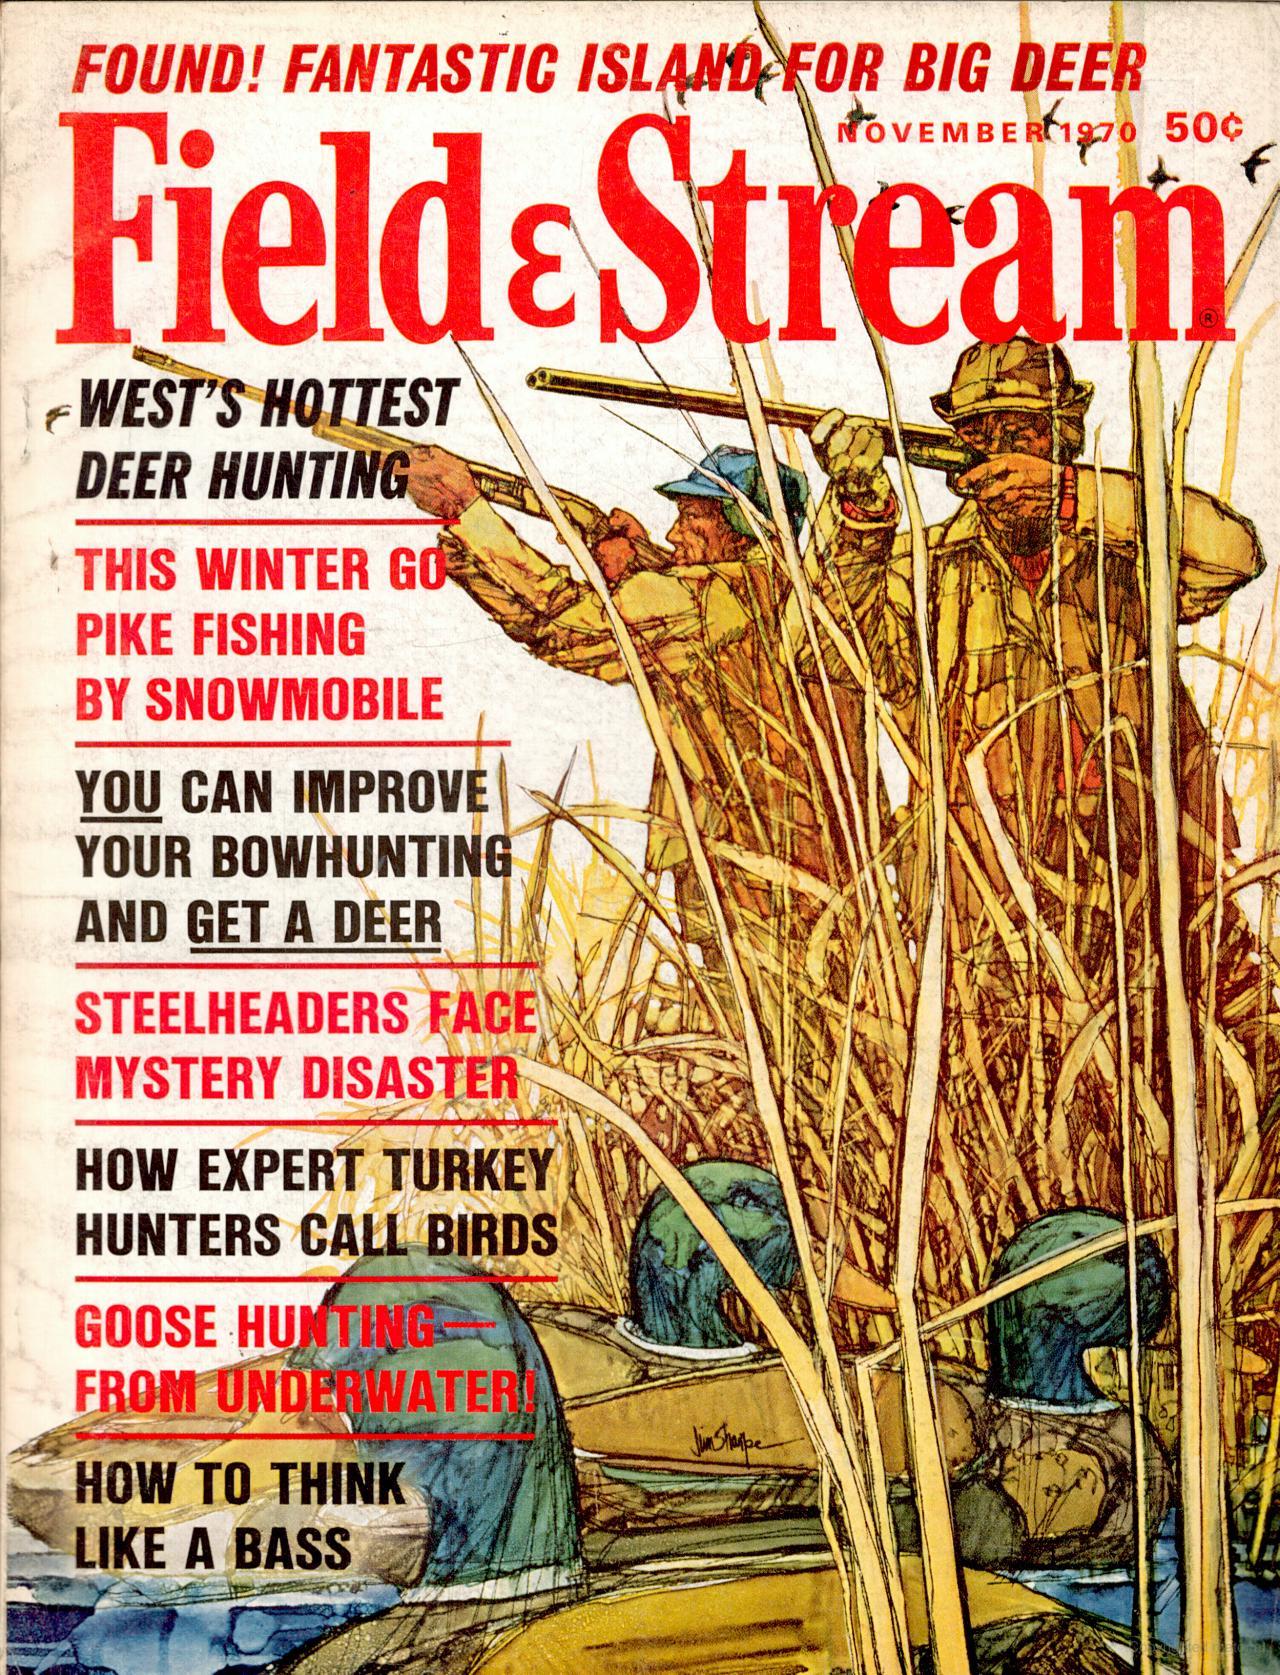 FIeld & Stream magazine cover from November 1970